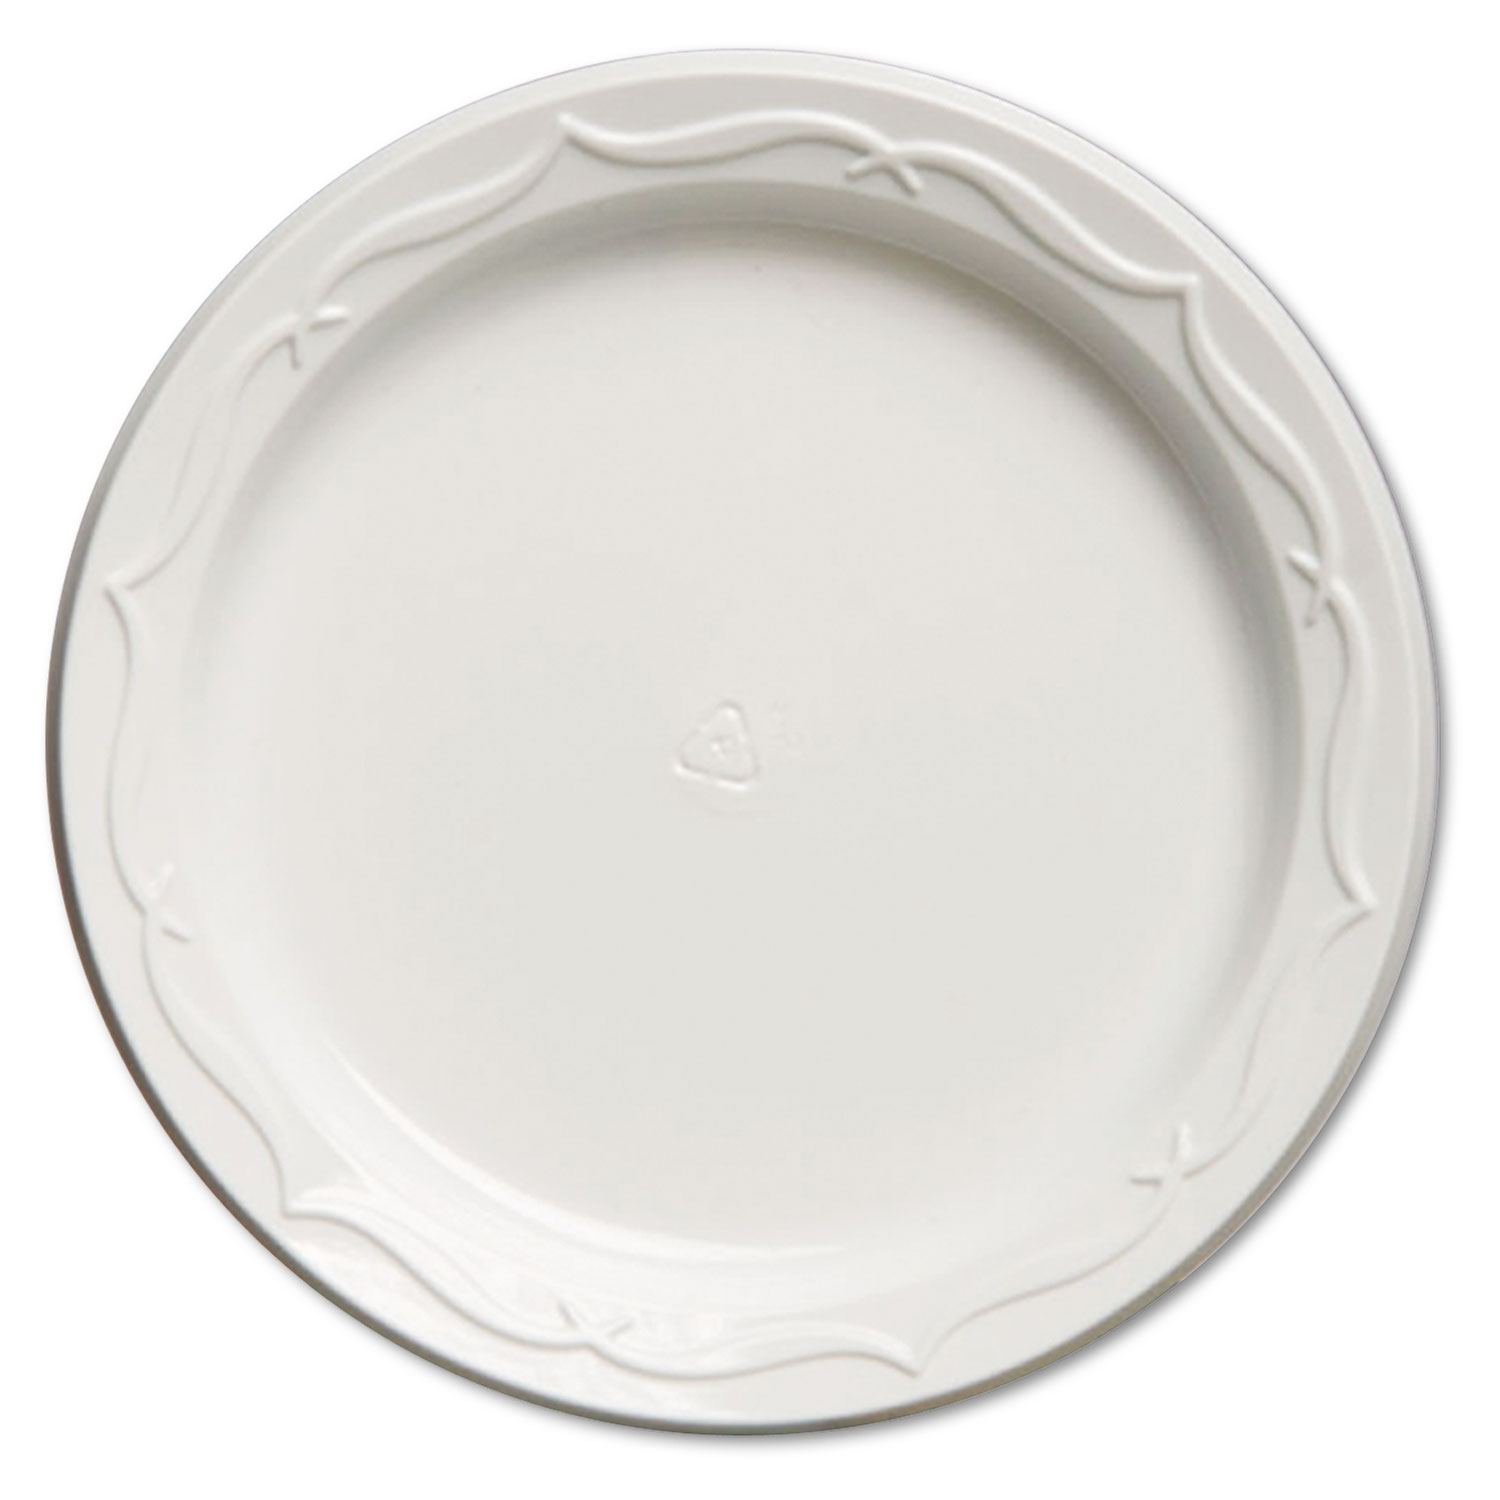  Genpak 70600--- Aristocrat Plastic Plates, 6, White, Round, 125/PK, 8 PK/CT (GNP70600) 